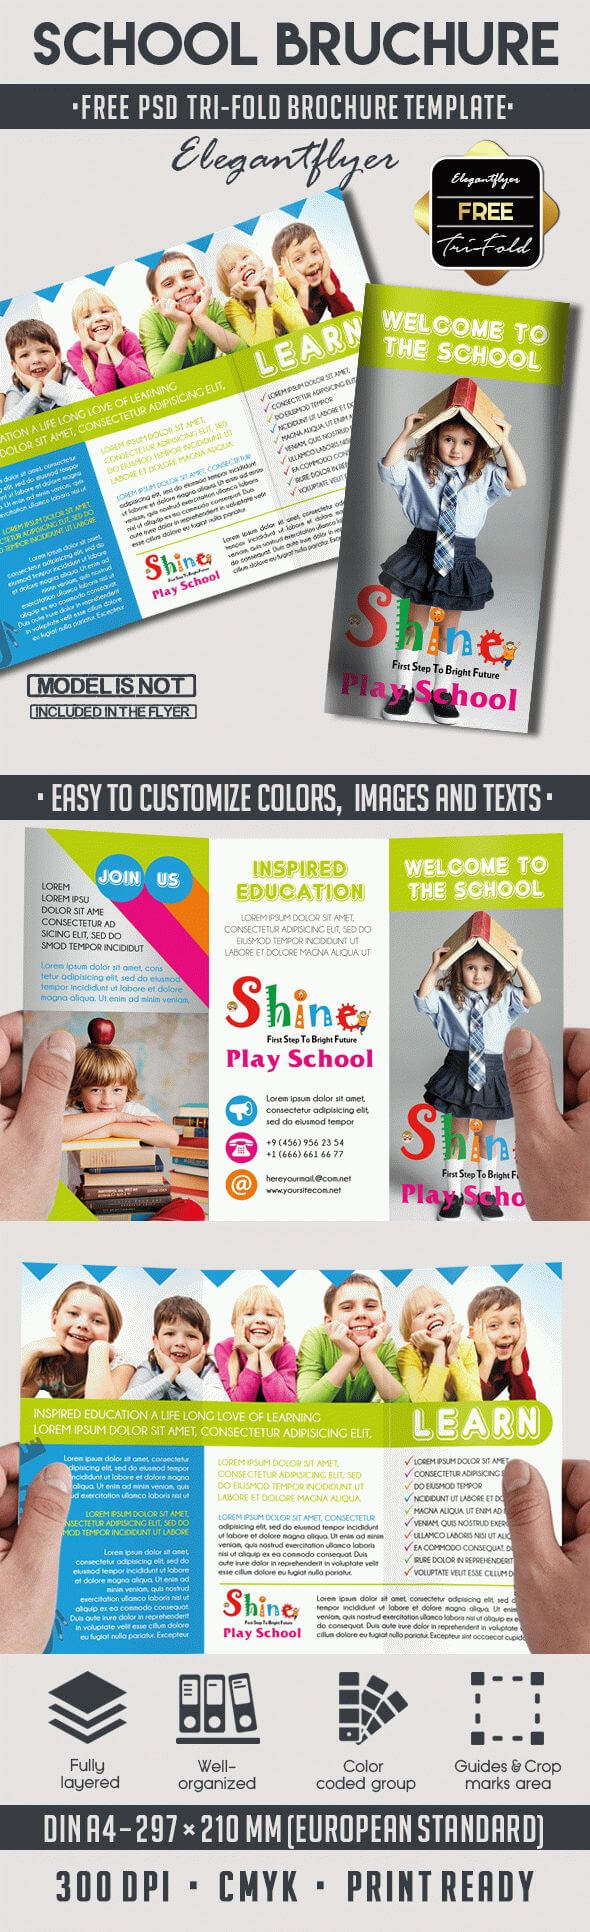 School – Free Psd Tri Fold Psd Brochure Template For Play School Brochure Templates